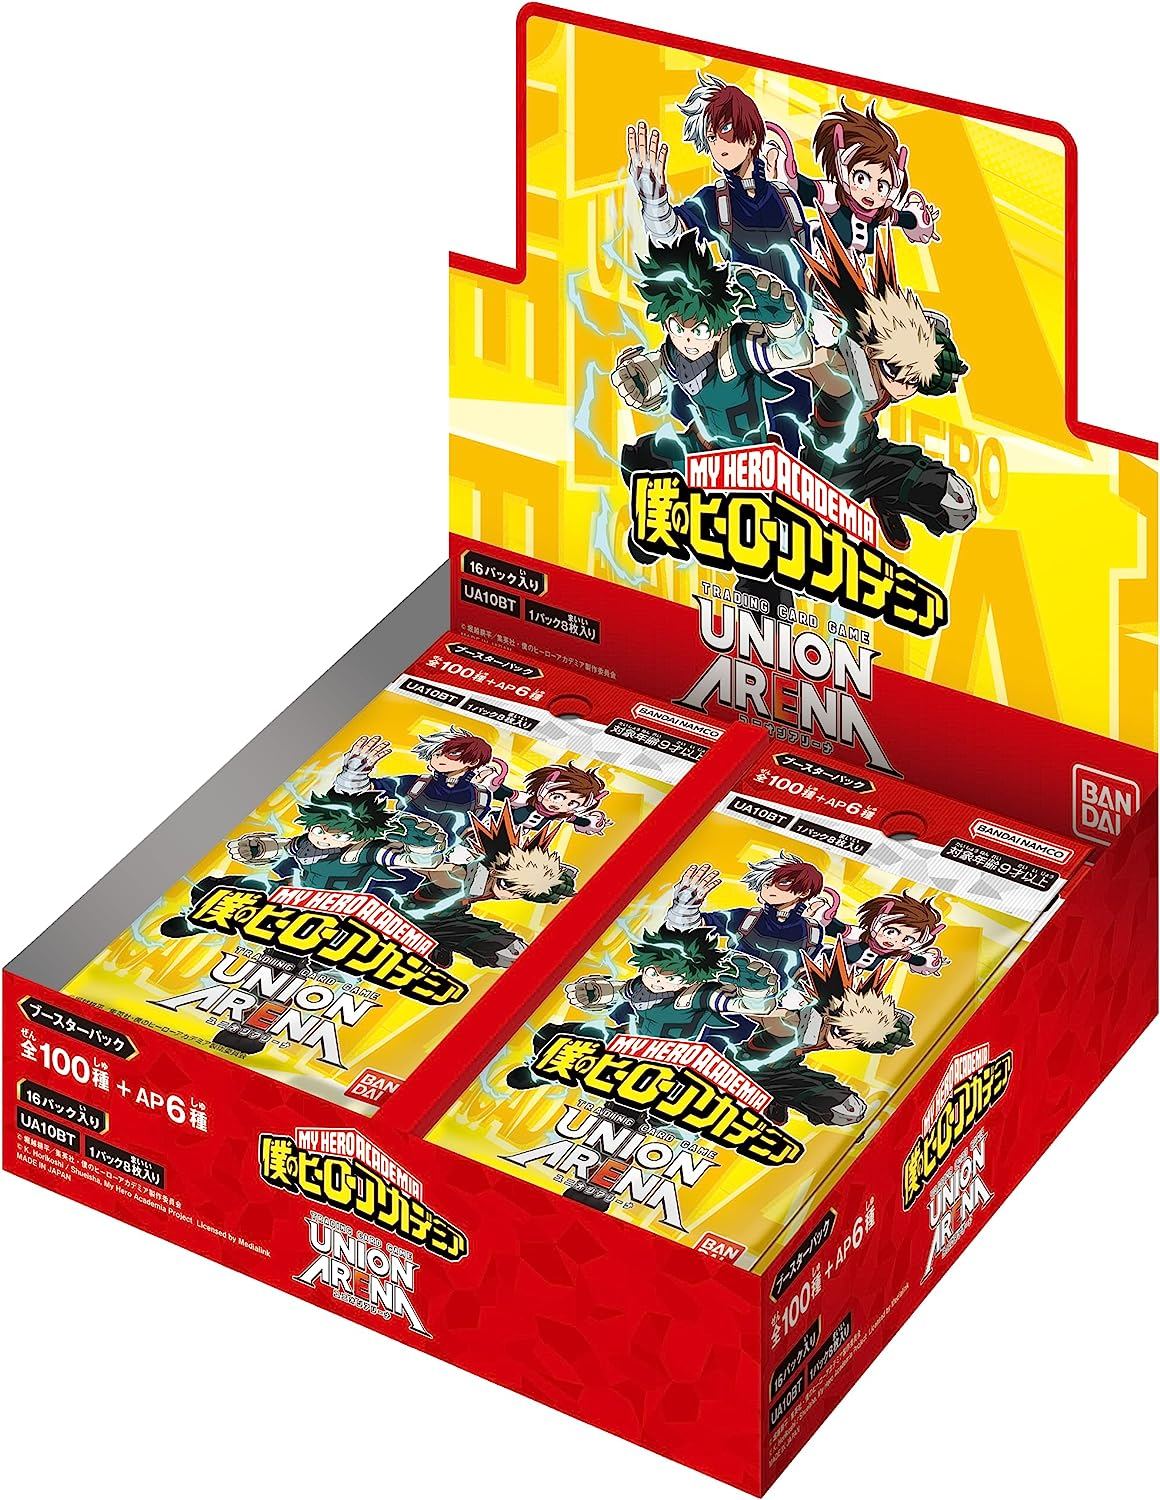 Union Arena - My Hero Academia Booster Pack UA10BT (Set of 16 Packs) Bandai